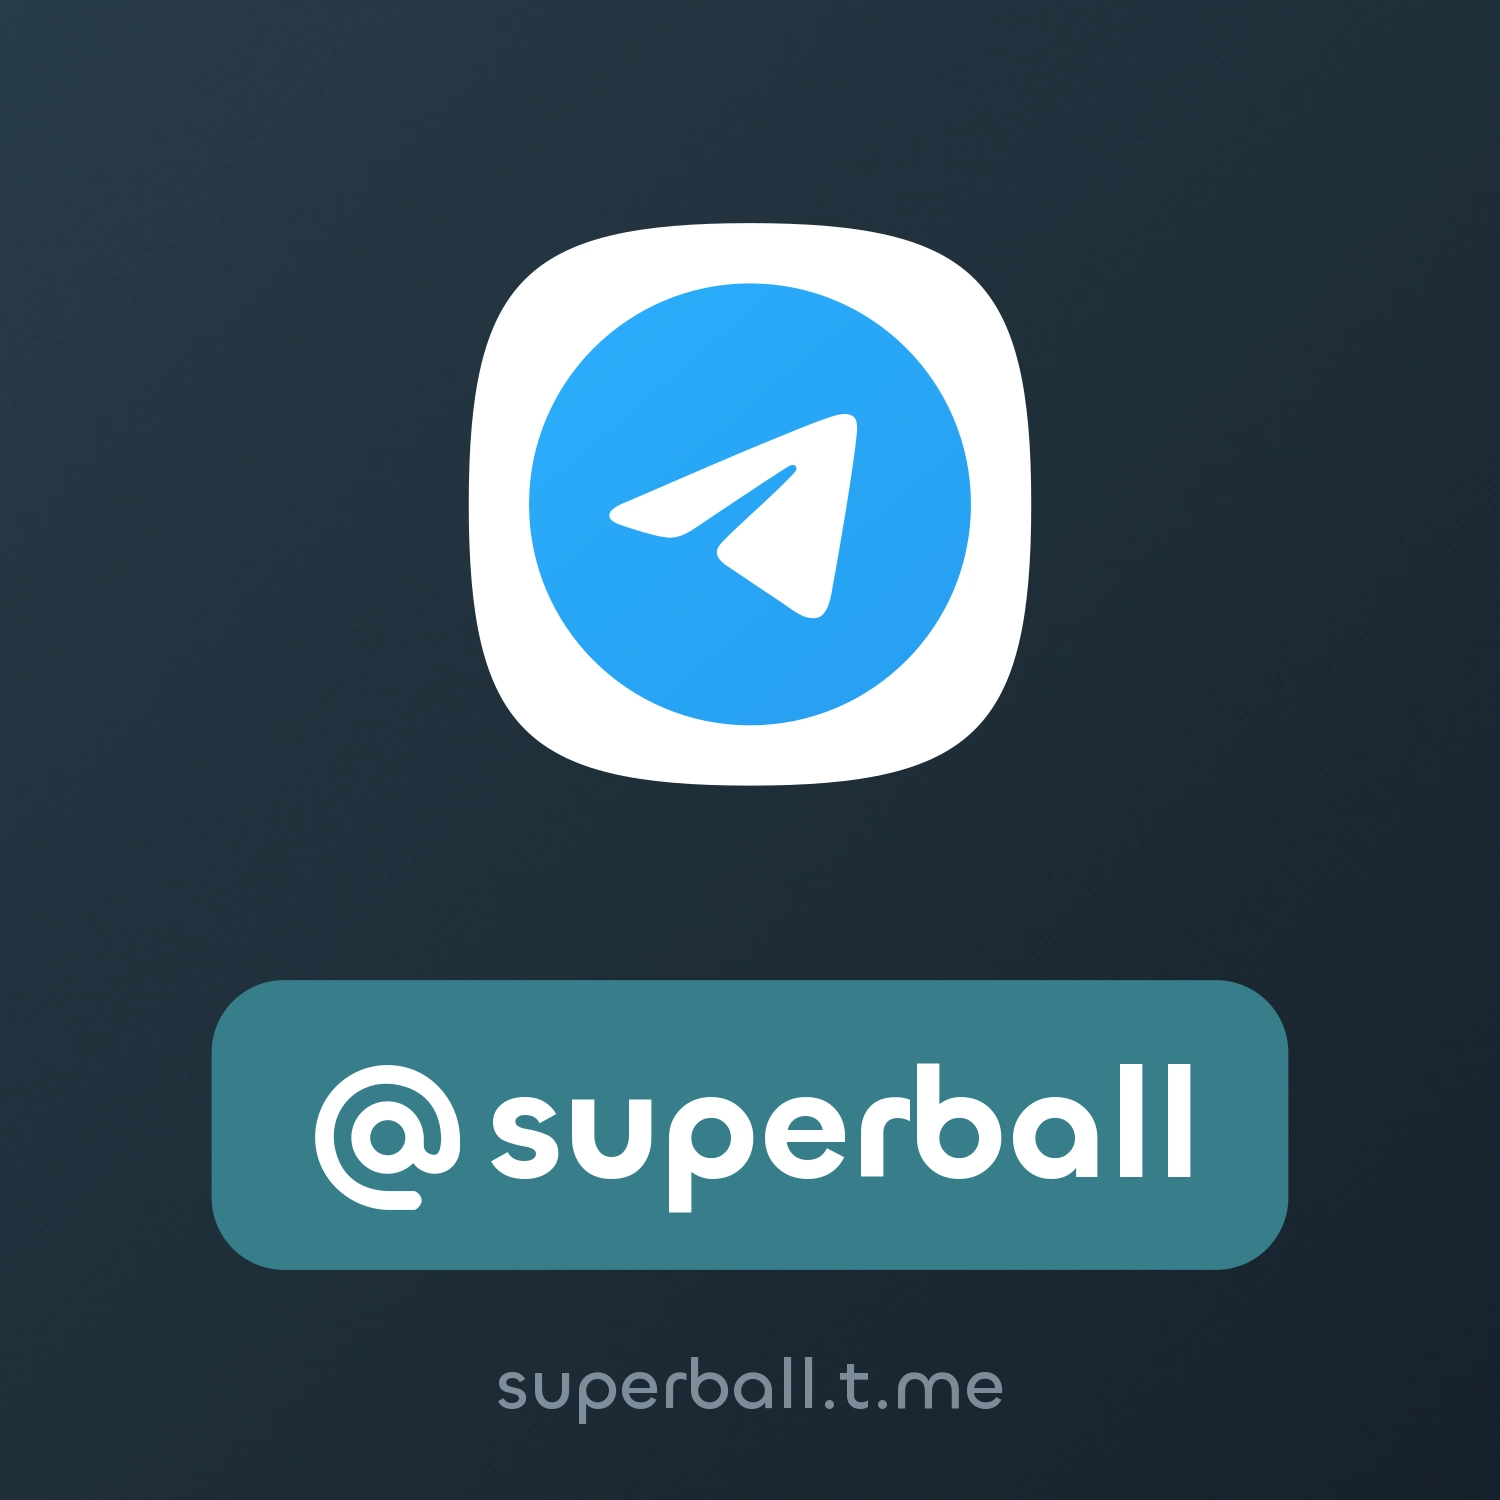 @superball